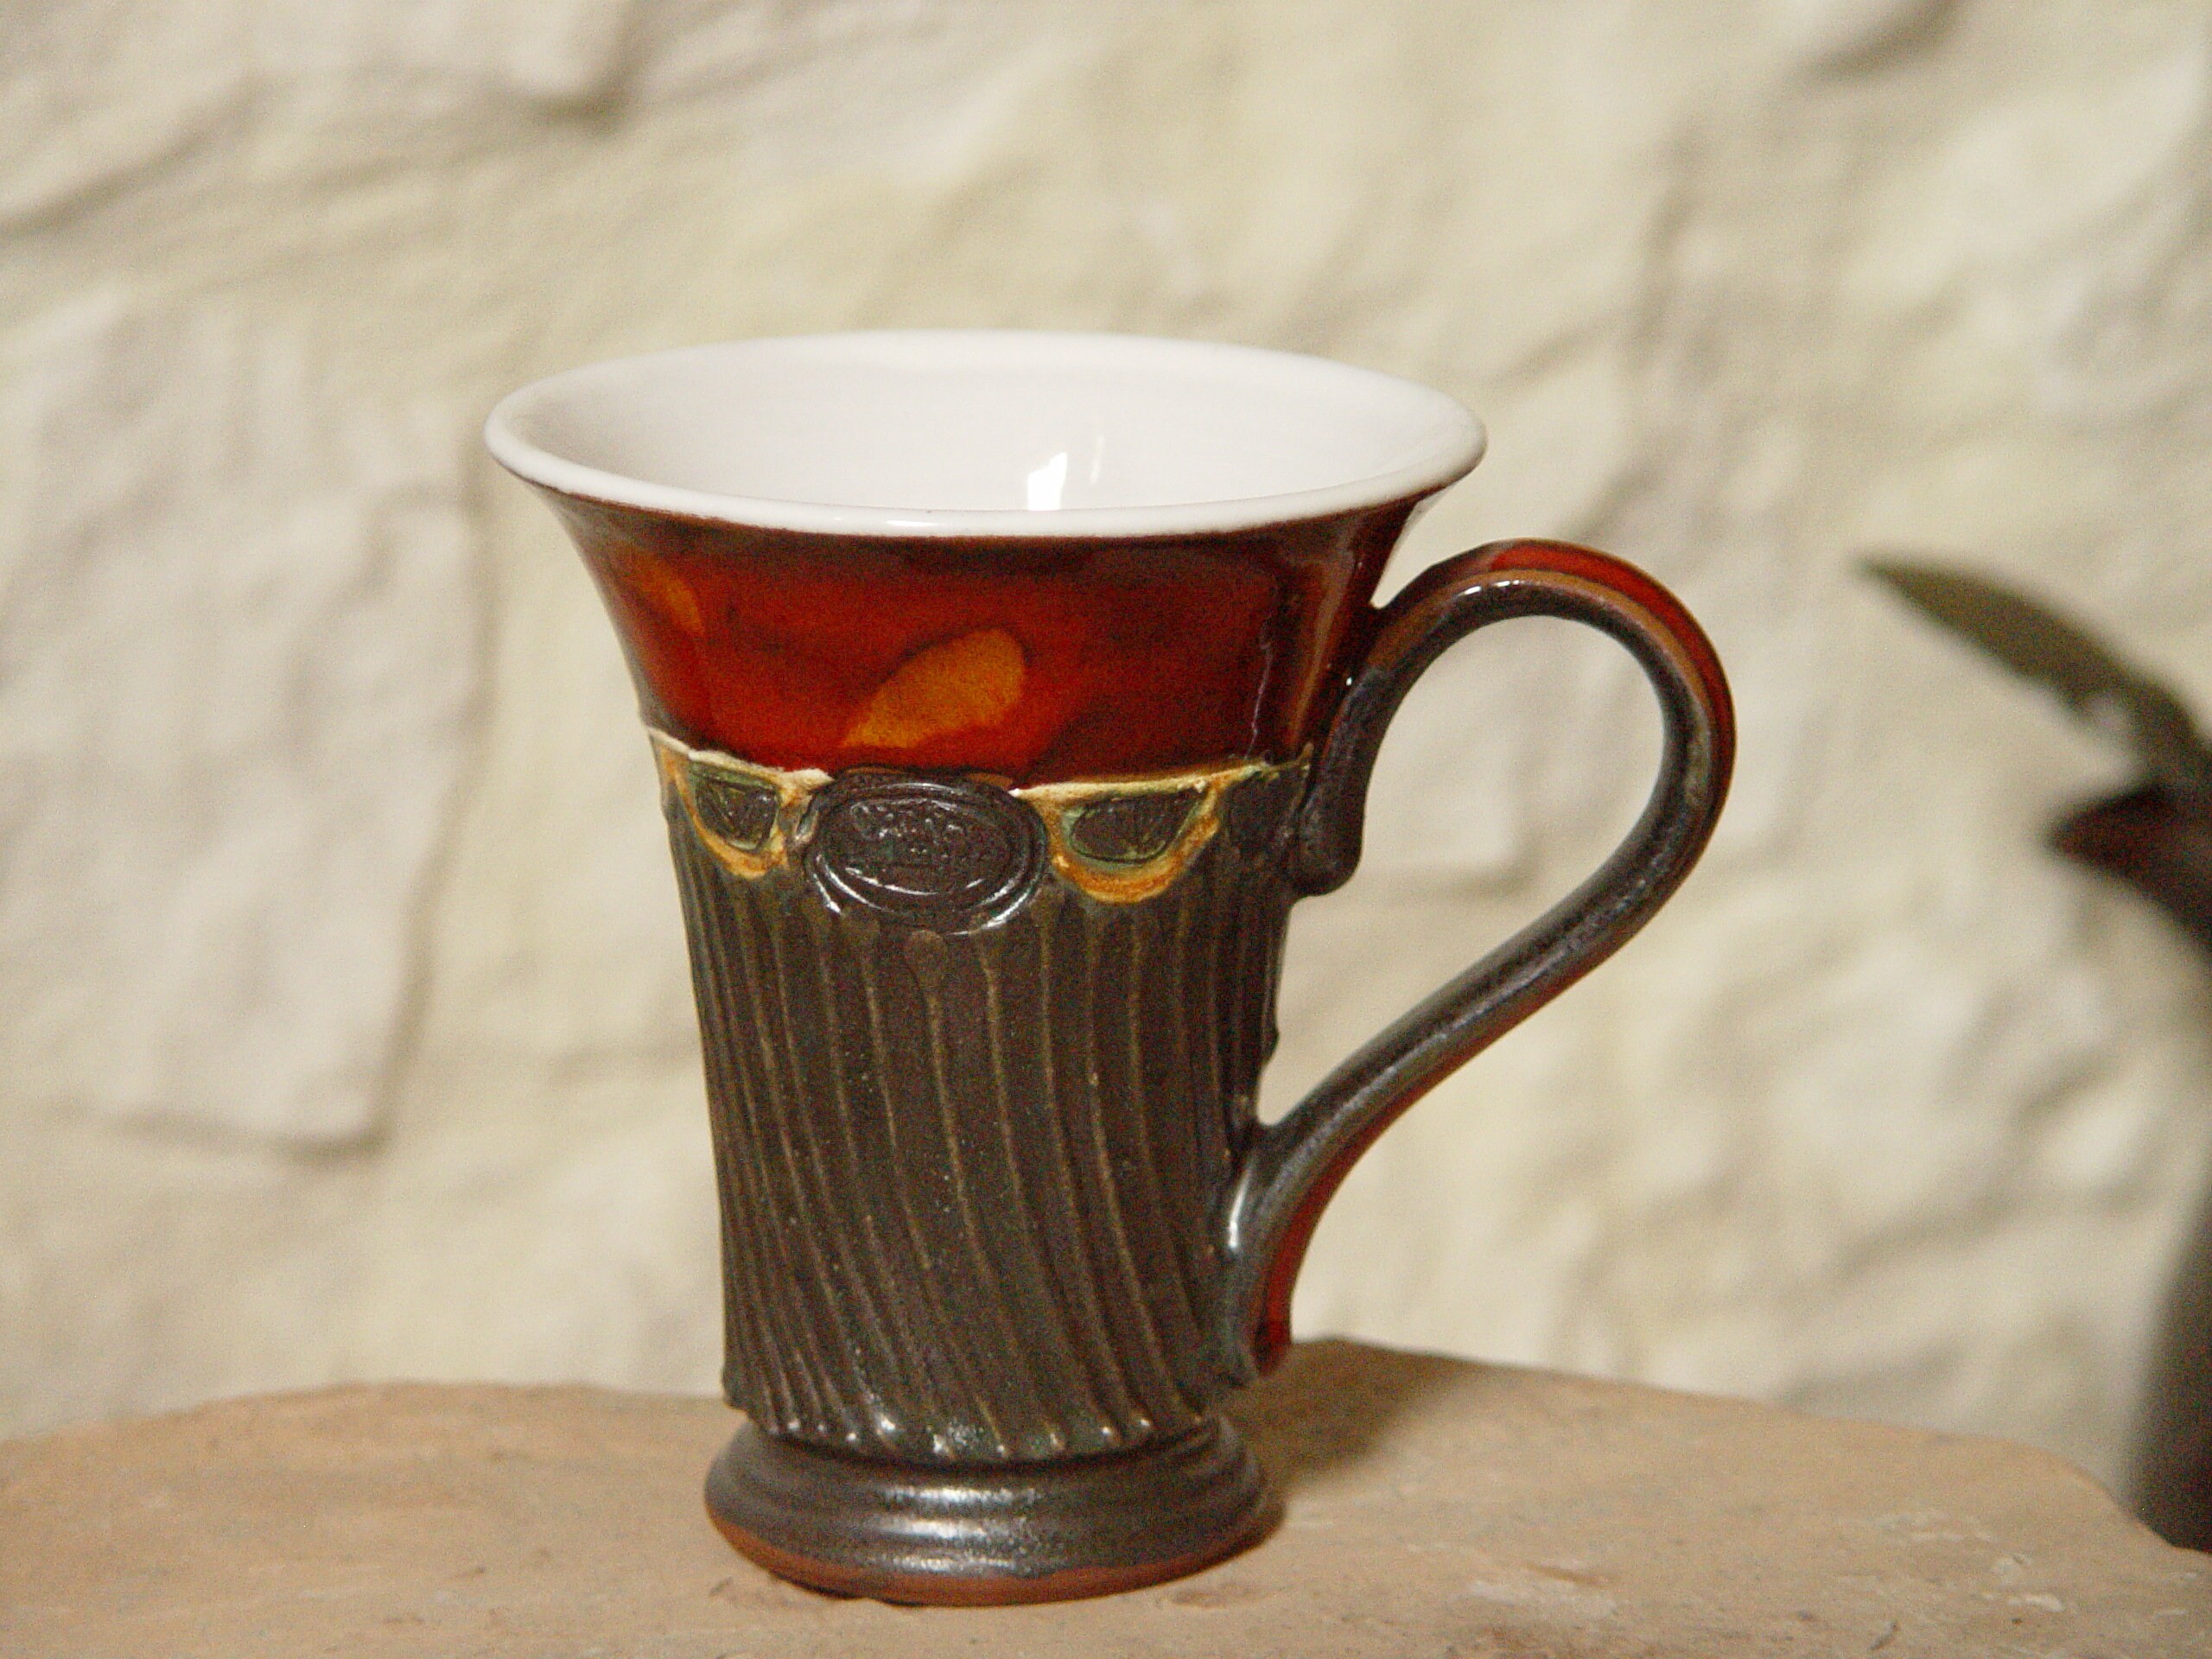  Handmade Red Pottery Mug - Slim Ceramic Cup - Unique Coffee Mug  - Danko Artisan Pottery - Christmas Gift - 150ml - Trees : Handmade Products